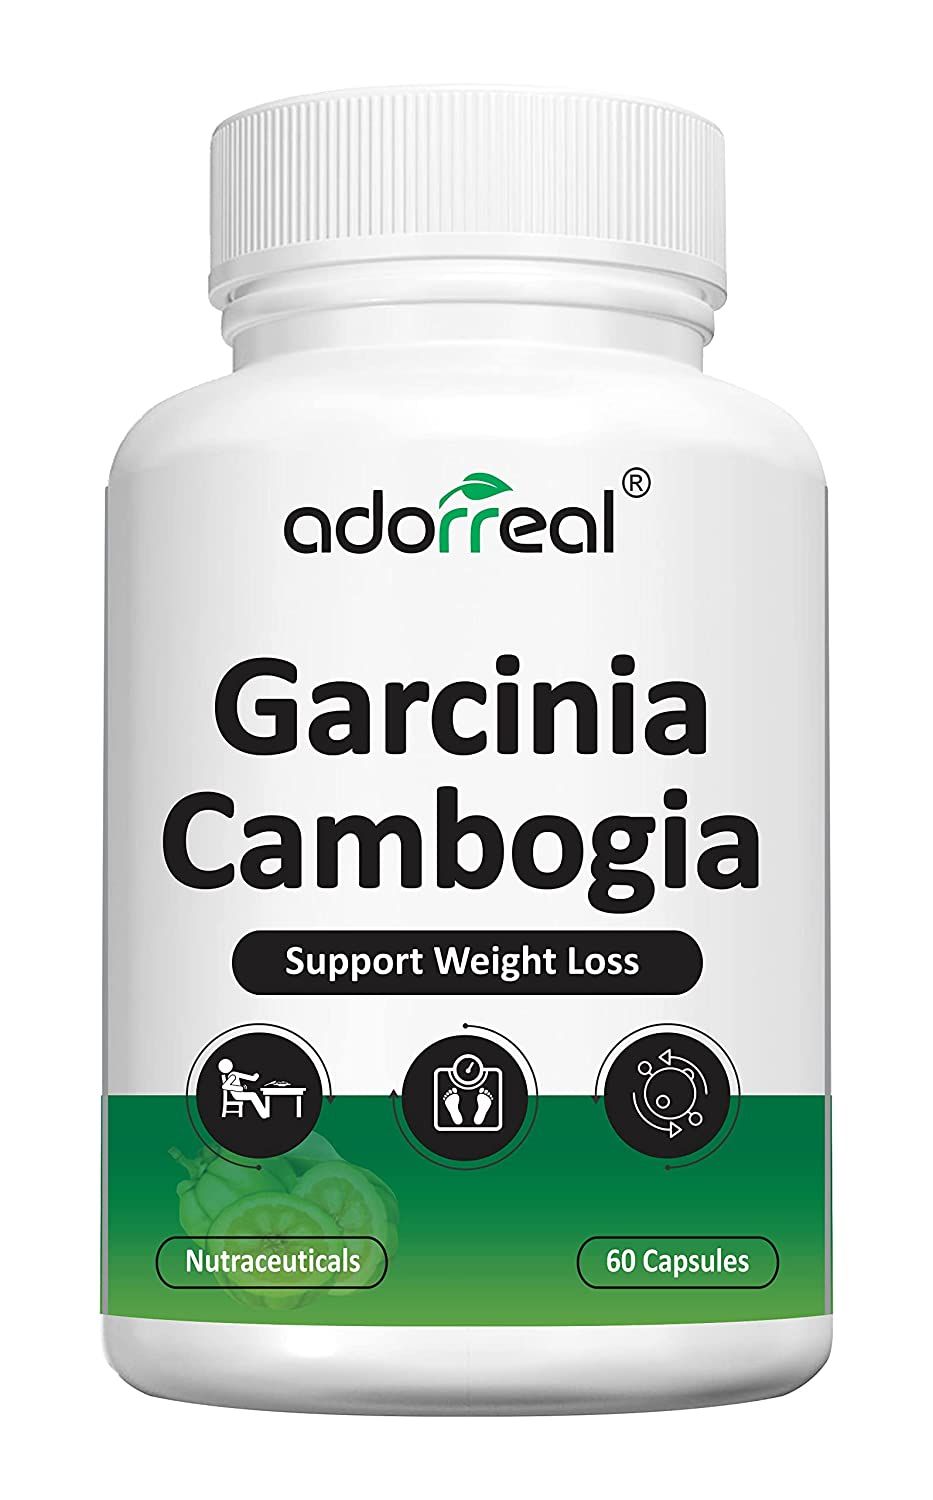 Adorreal Garcinia Cambogia Support Weight Loss Image